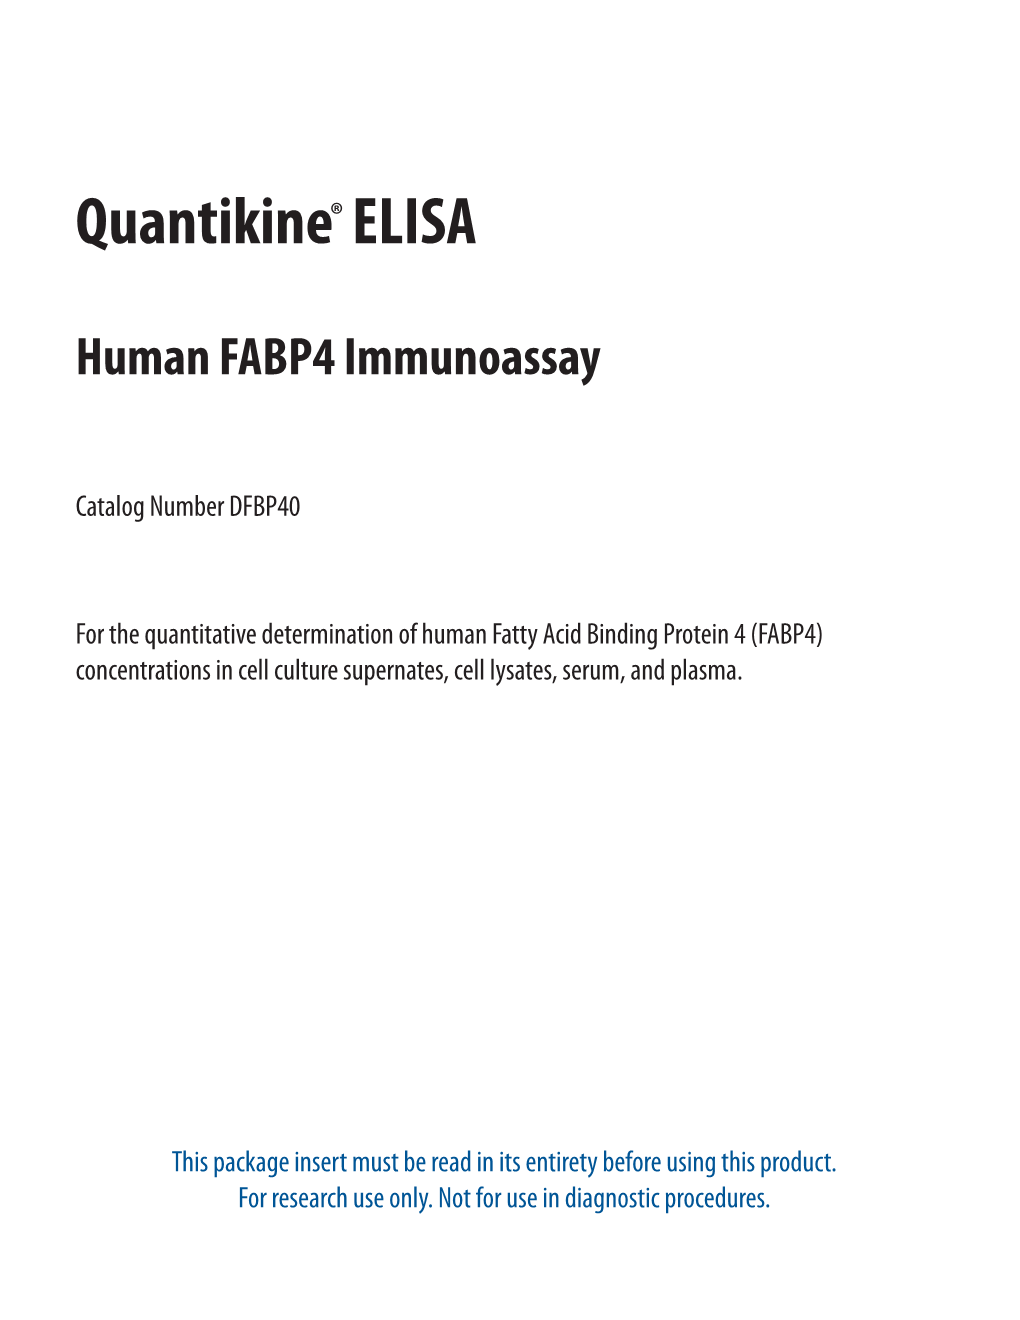 Human FABP4 Quantikine ELISA